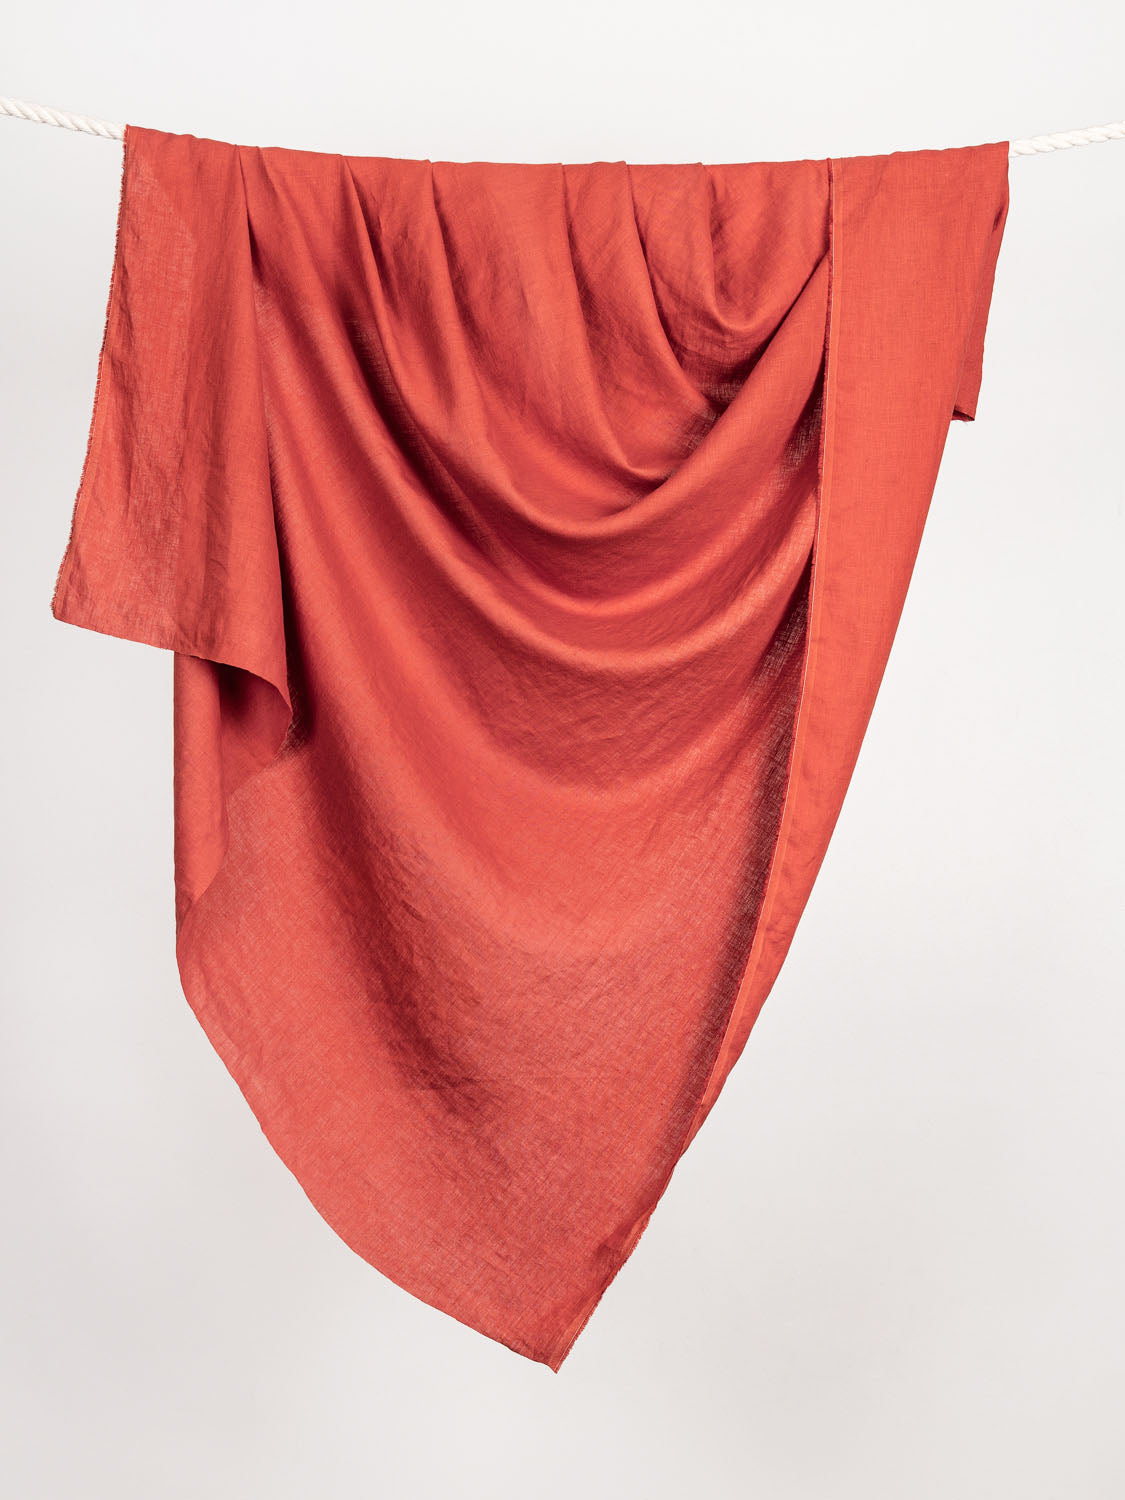 Midweight Core Collection Linen - Blood Orange | Core Fabrics